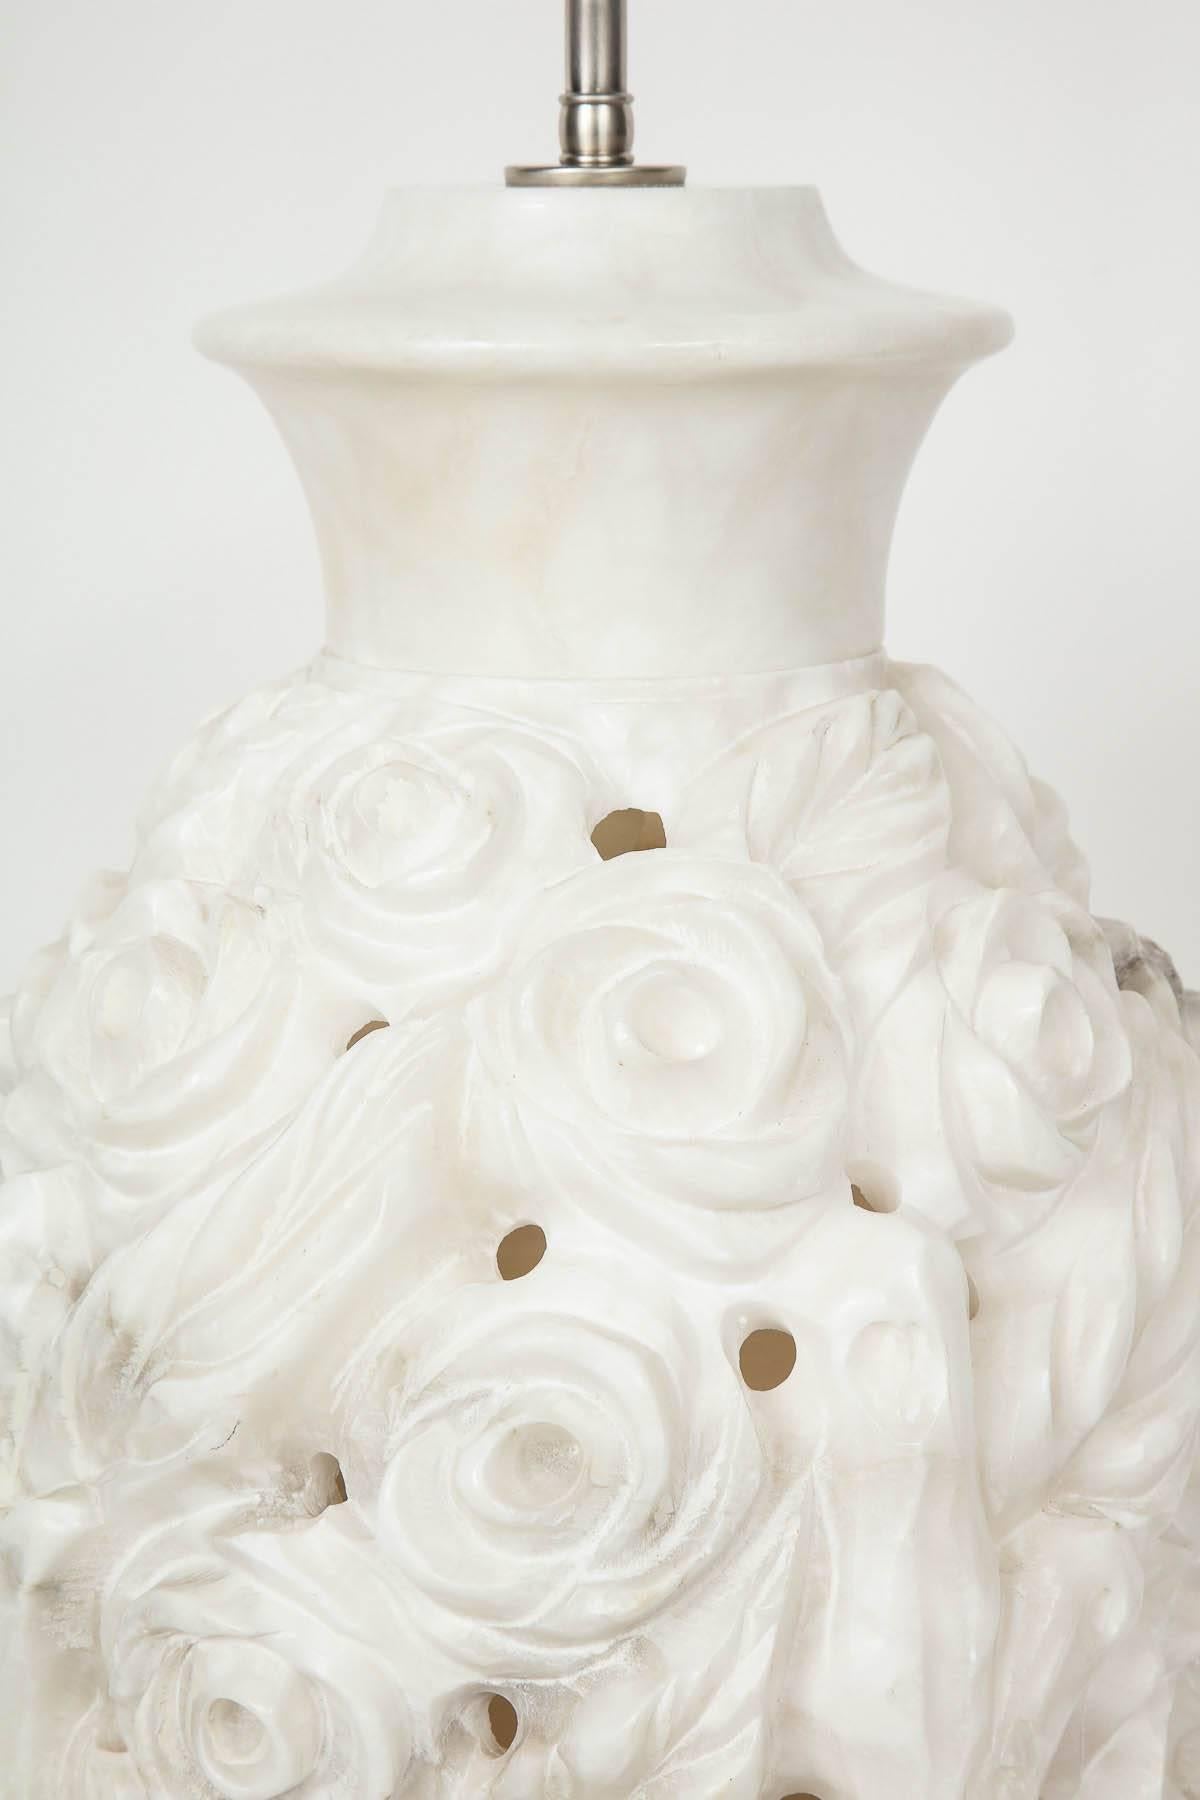 Hollywood Regency Large Italian Hand-Carved Alabaster Floral Lamps